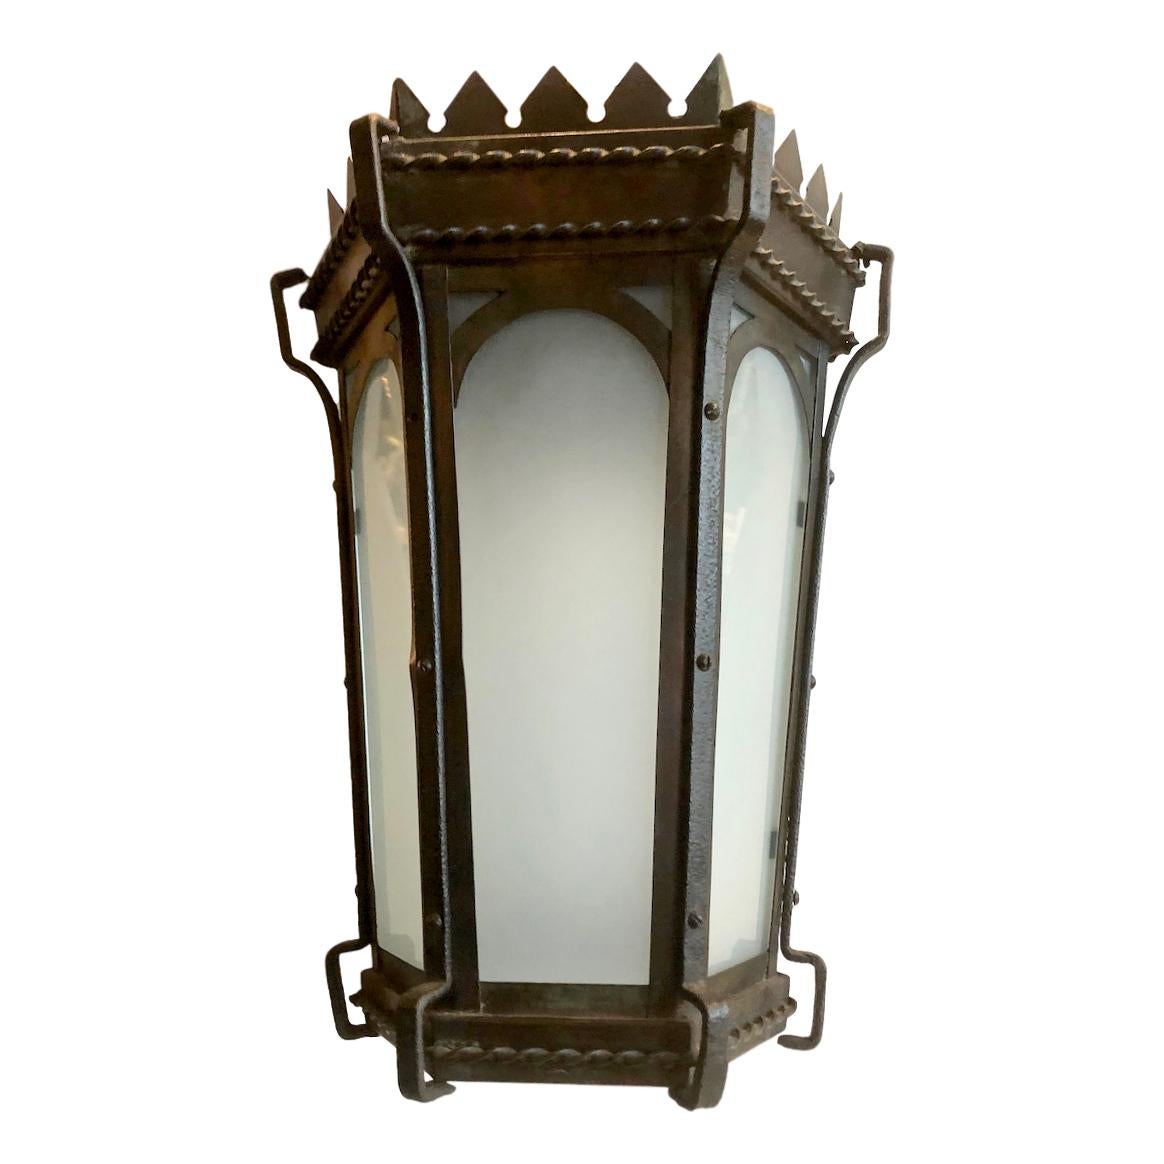 A circa 1920s English lantern with glass insets and original patina.

Measurements:
Minimum drop 21